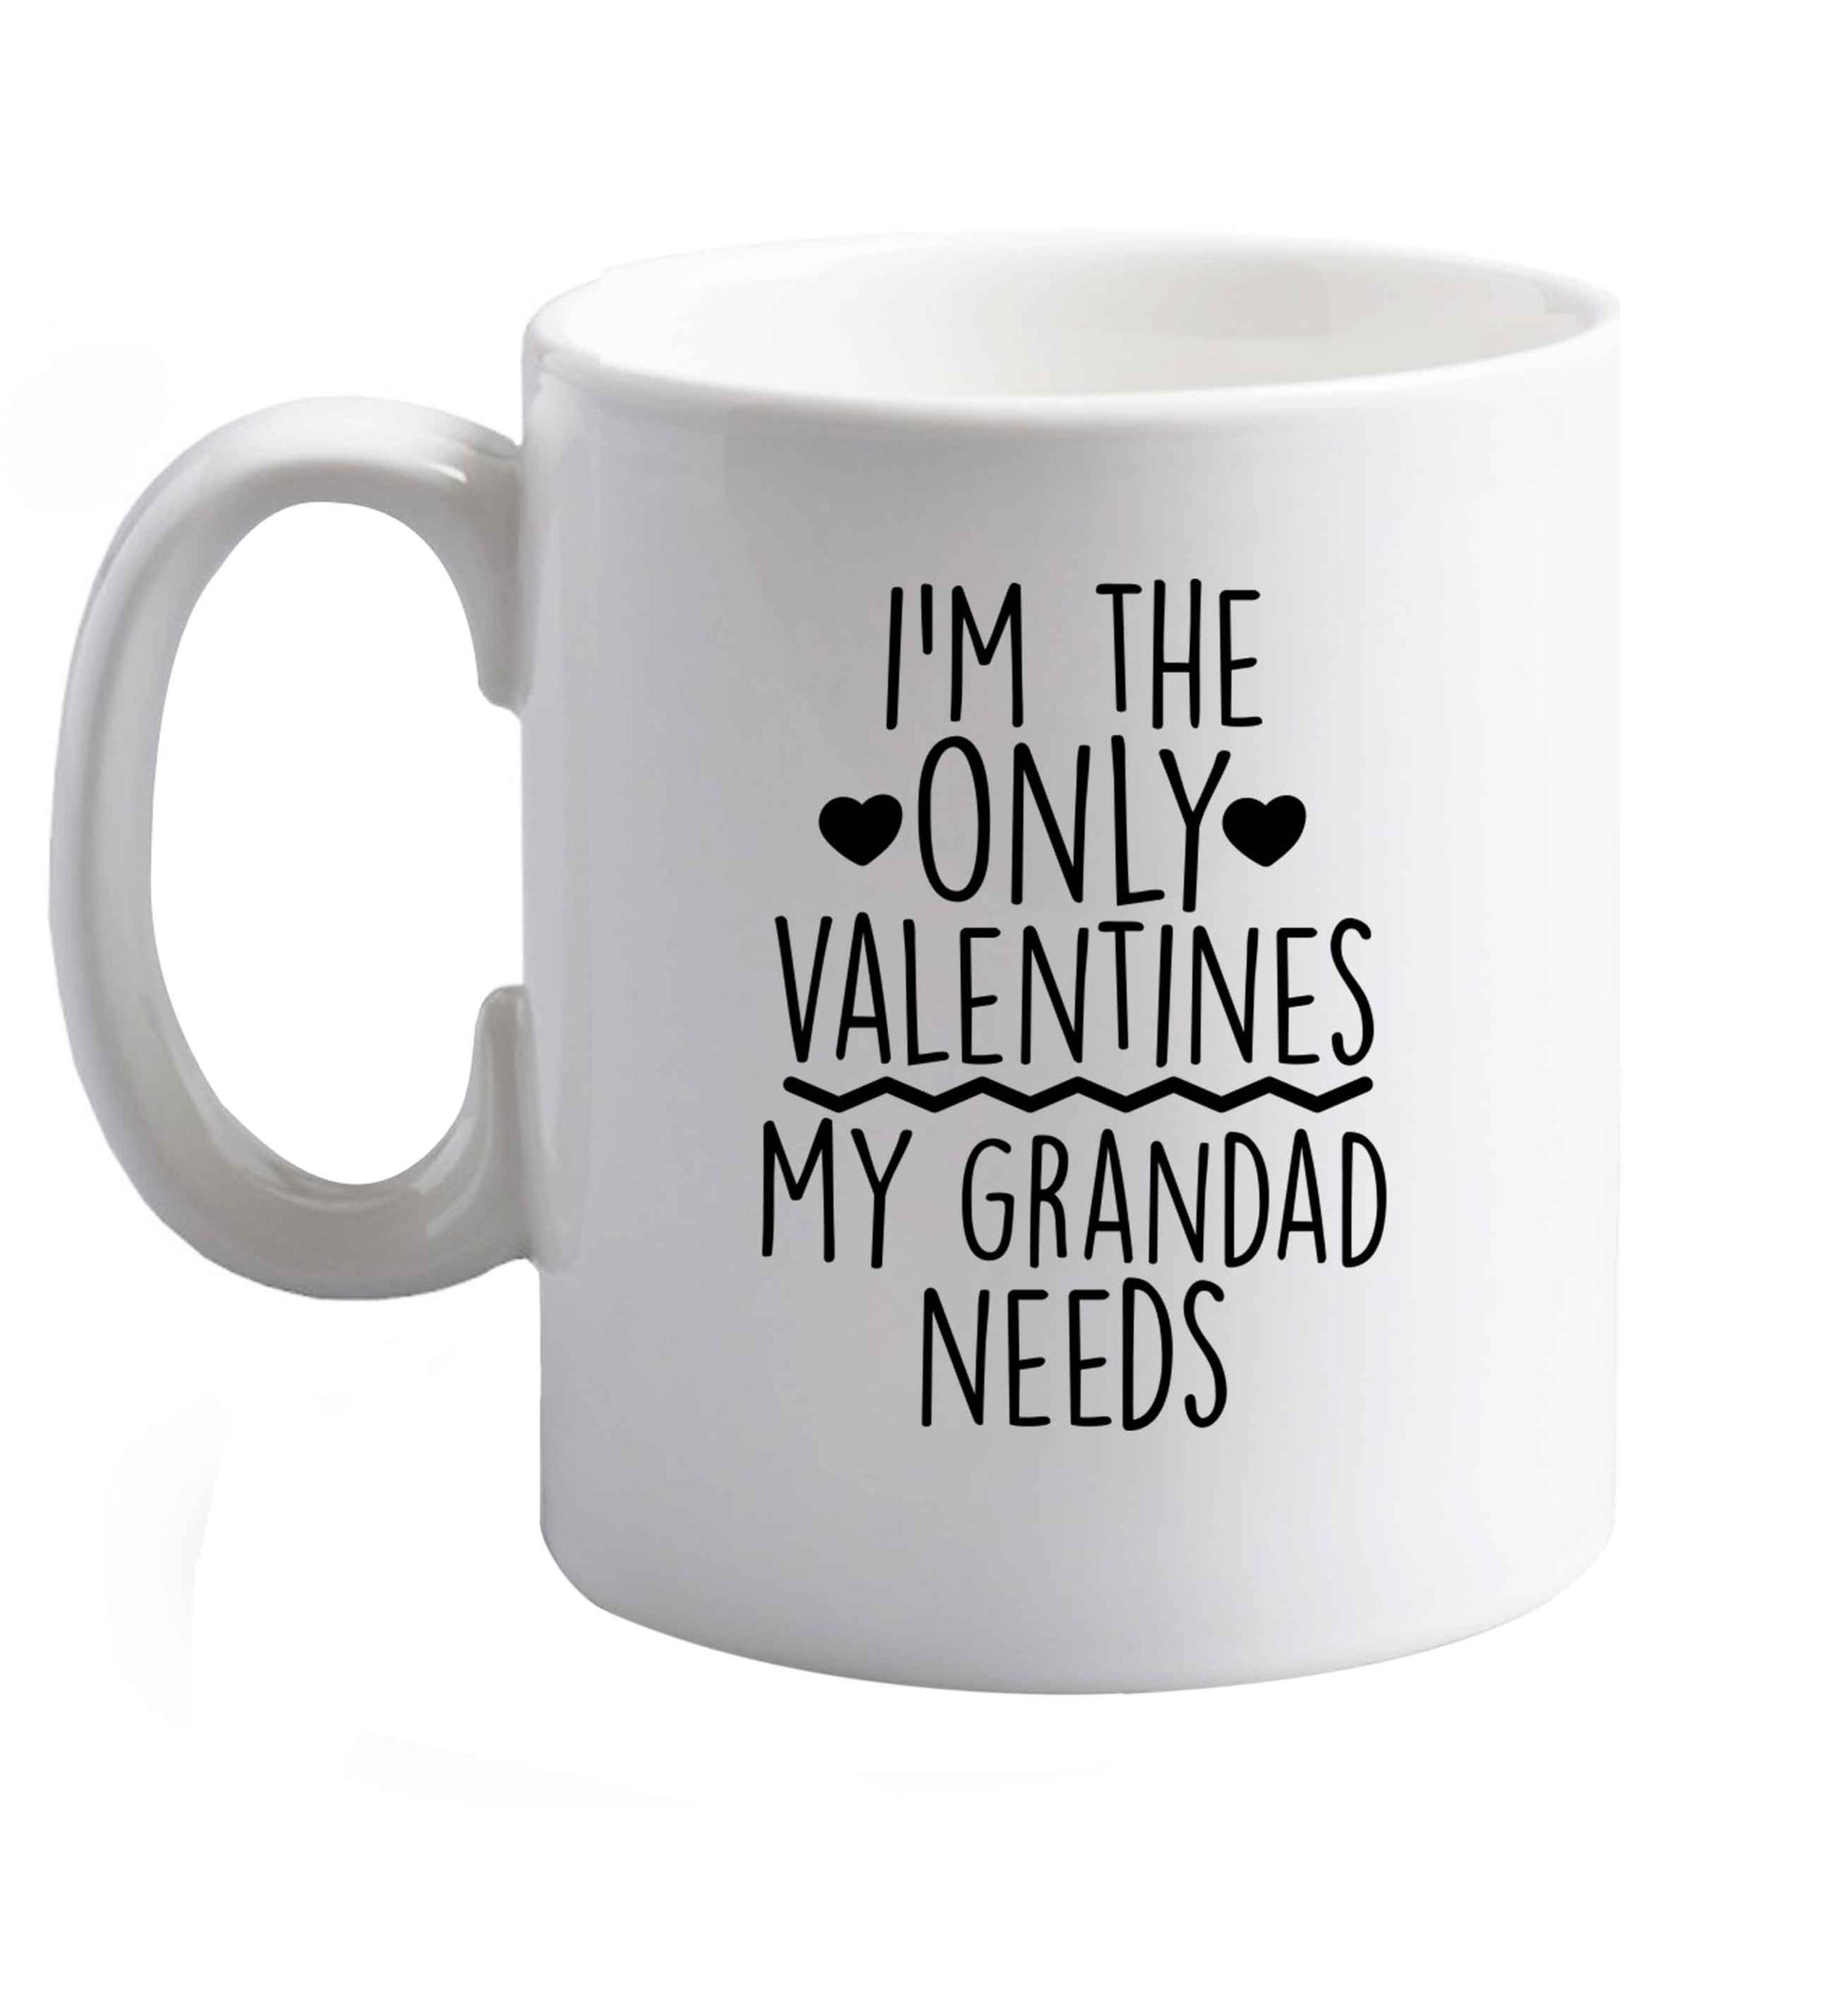 10 oz I'm the only valentines my grandad needs ceramic mug right handed